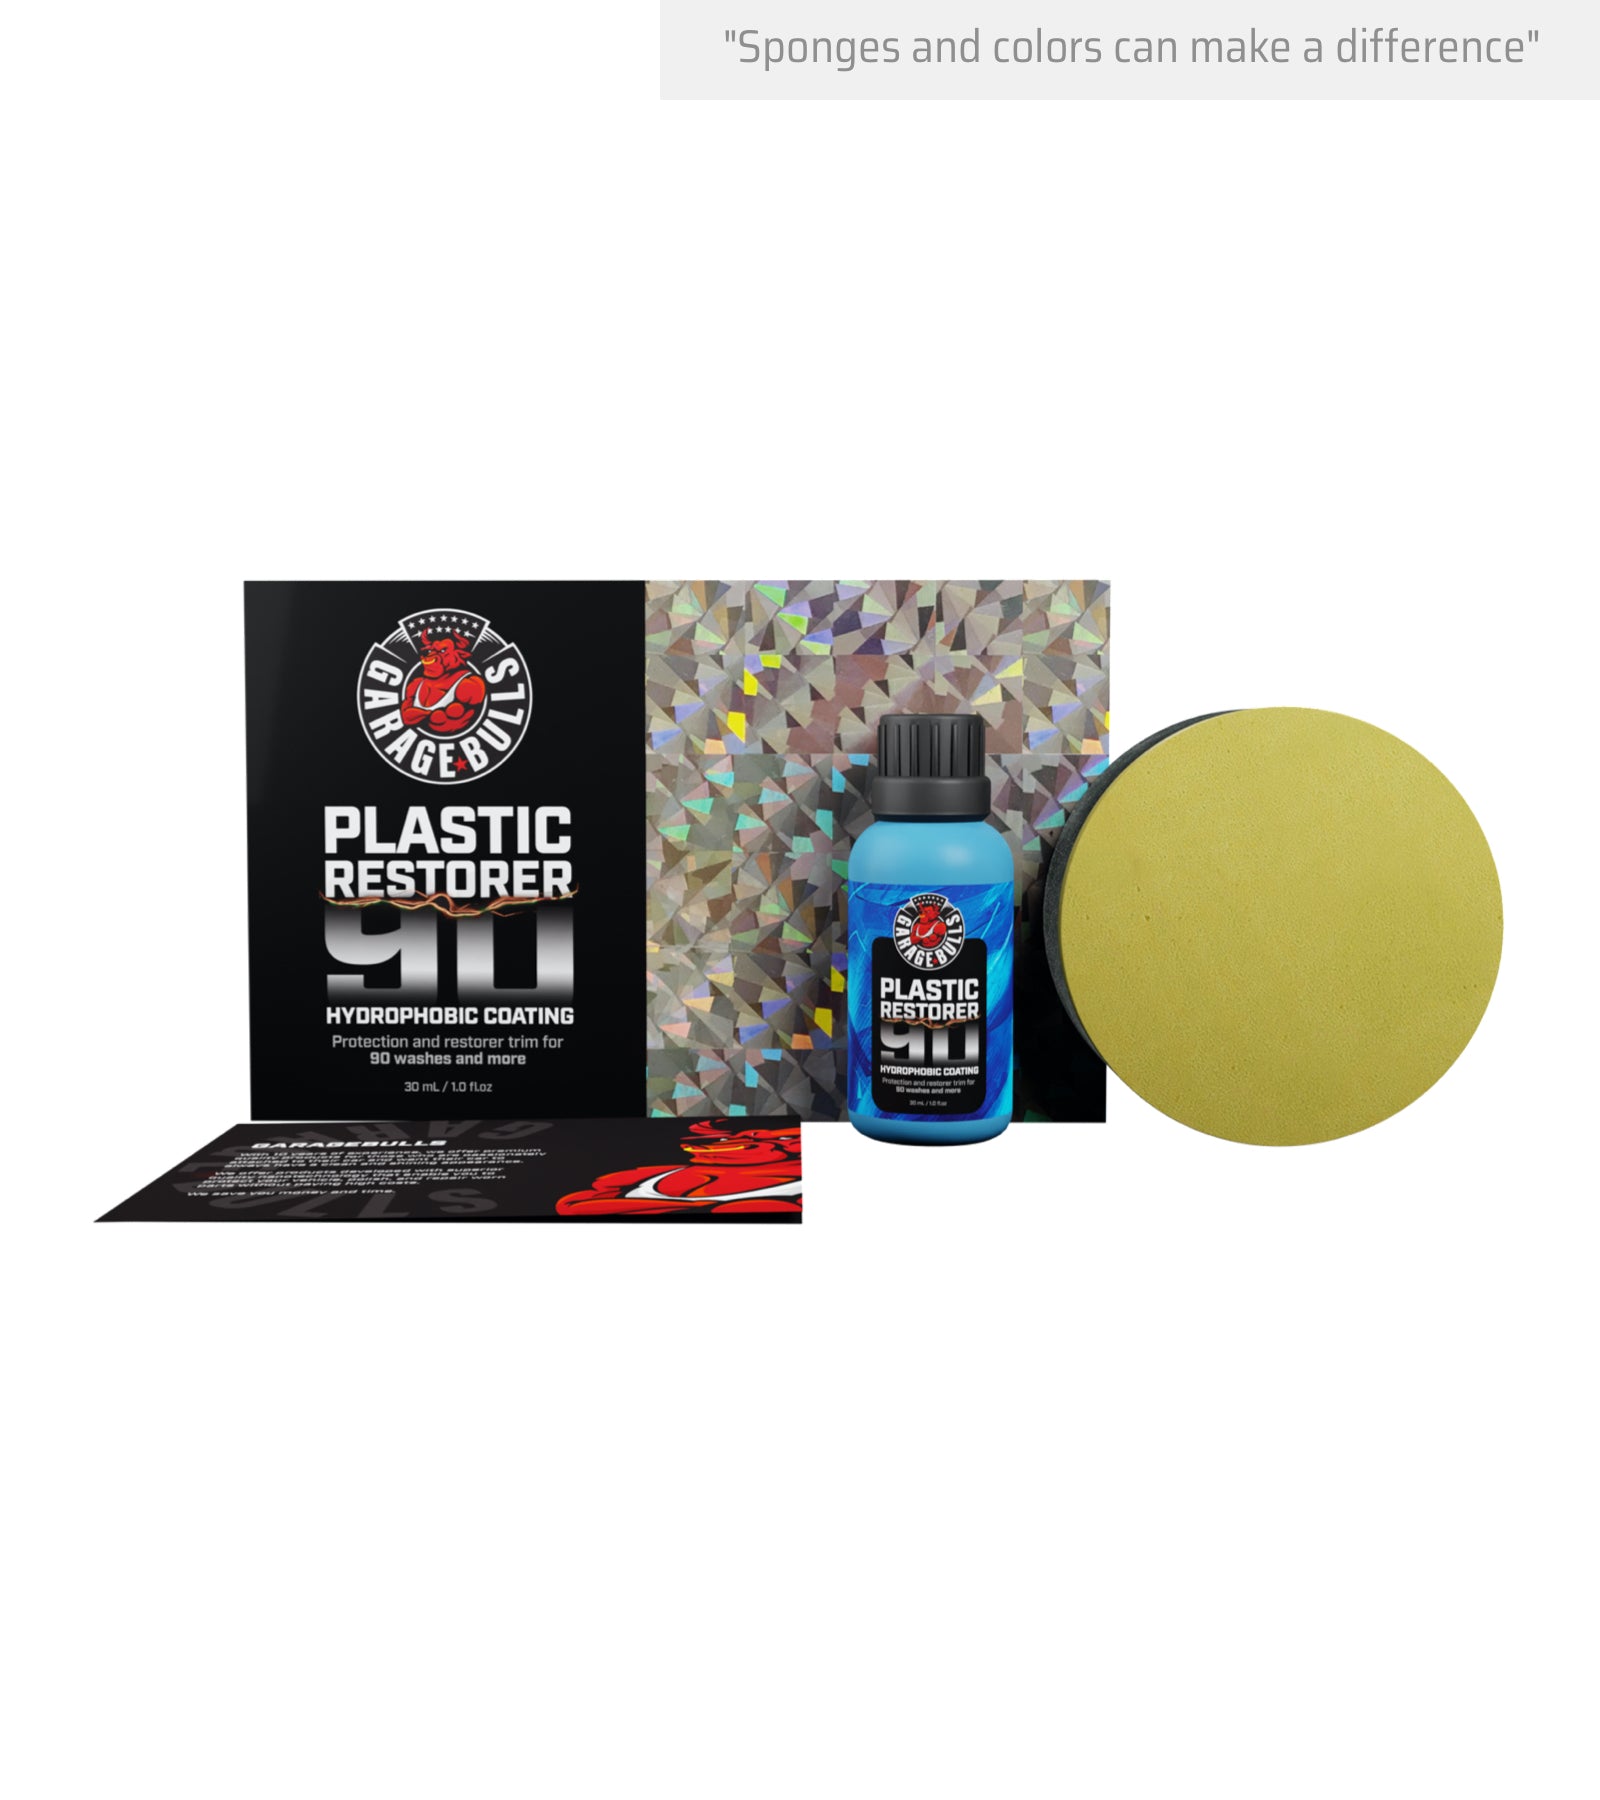 Ultimate Black Trim Restorer Protect & Restore Rubber & Plastic - 12 fl oz